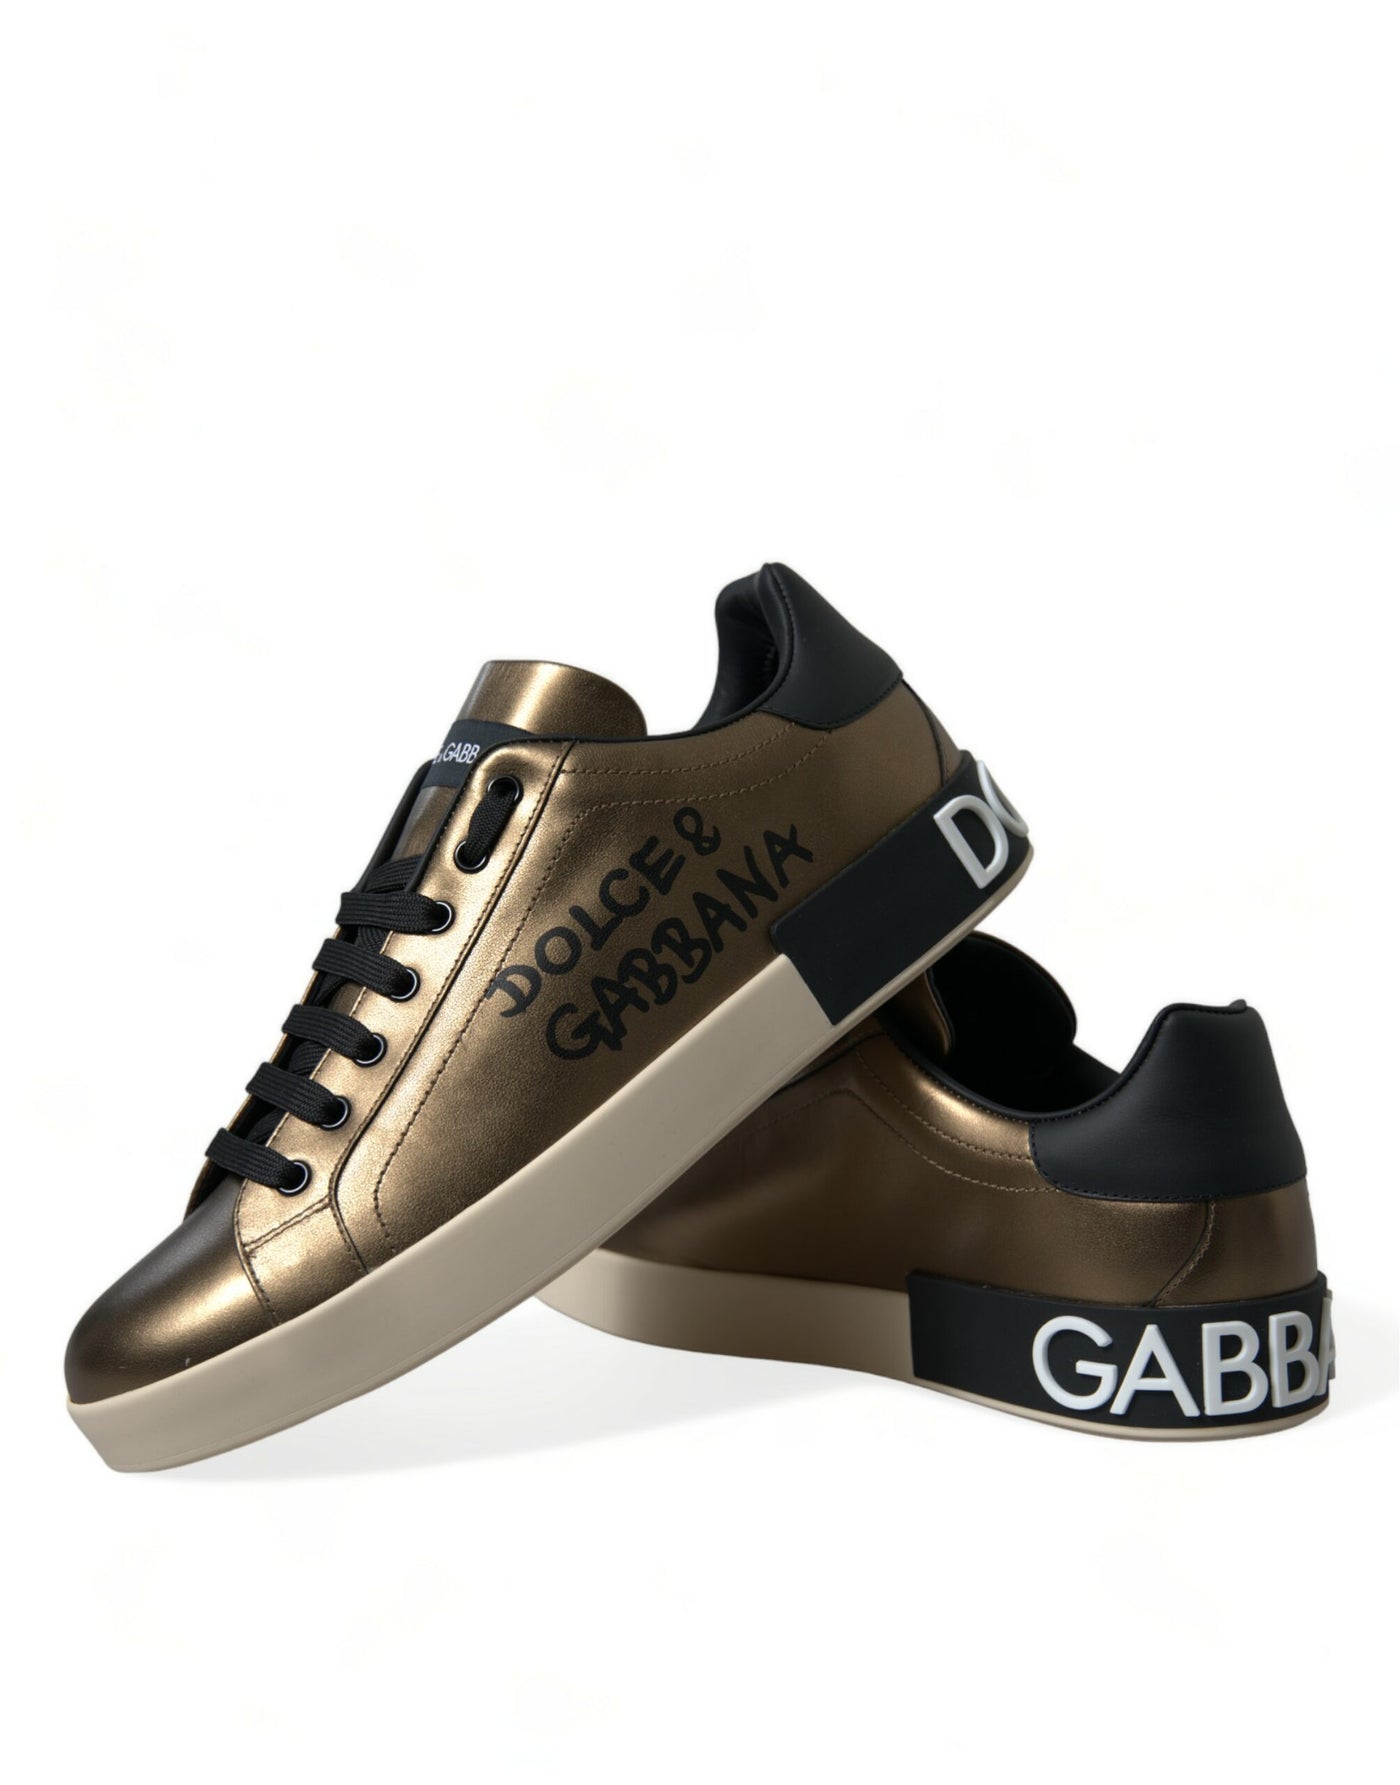 Dolce & Gabbana Bronze Leather Portofino Logo Men Sneakers Shoes